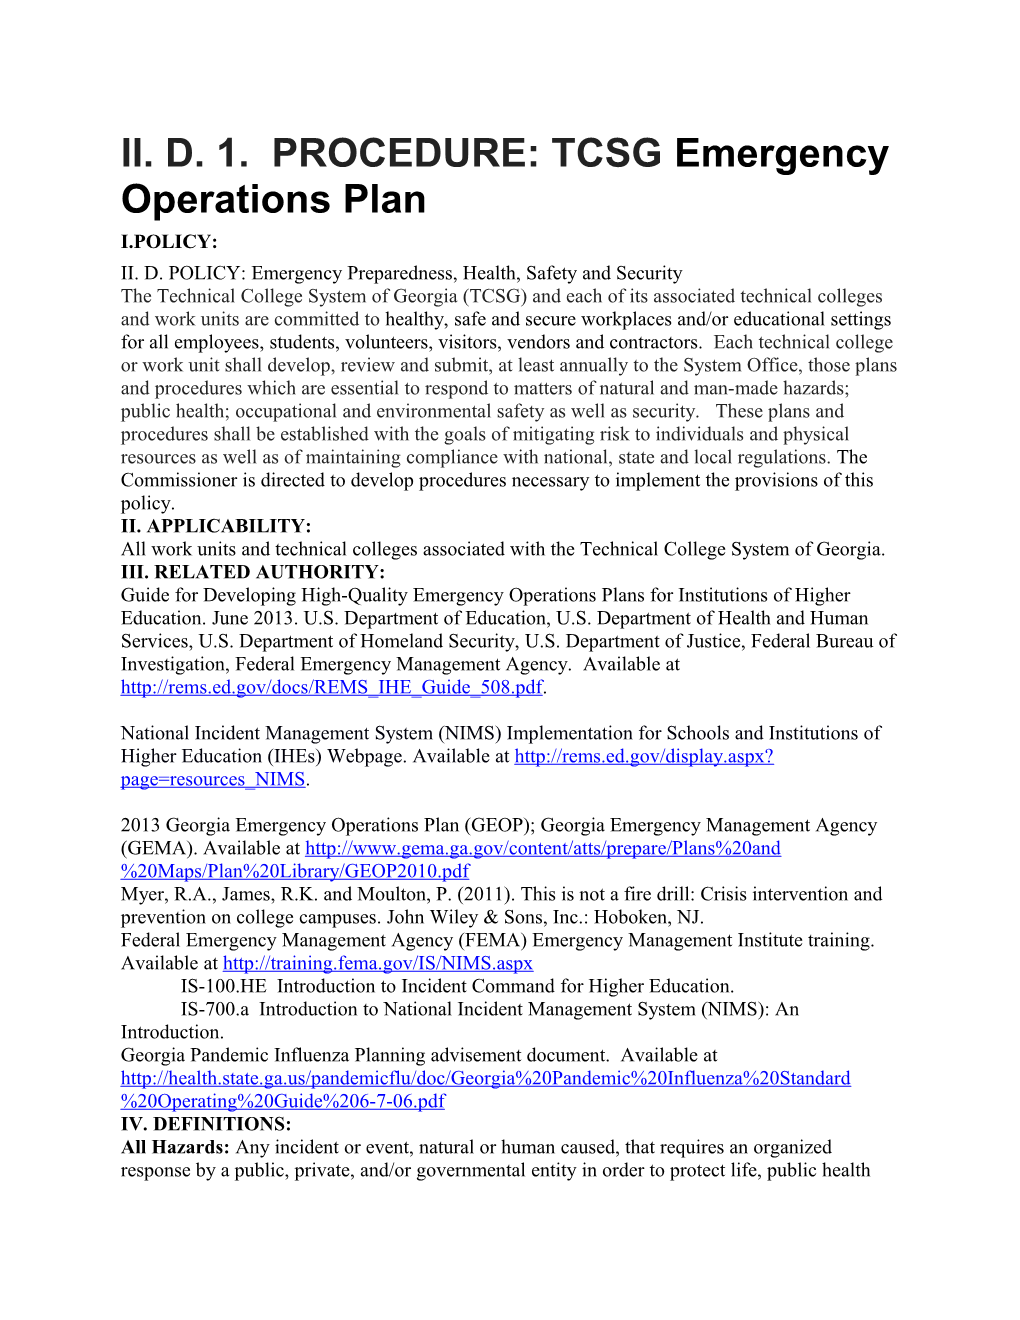 II. D. 1. PROCEDURE: TCSG Emergency Operations Plan